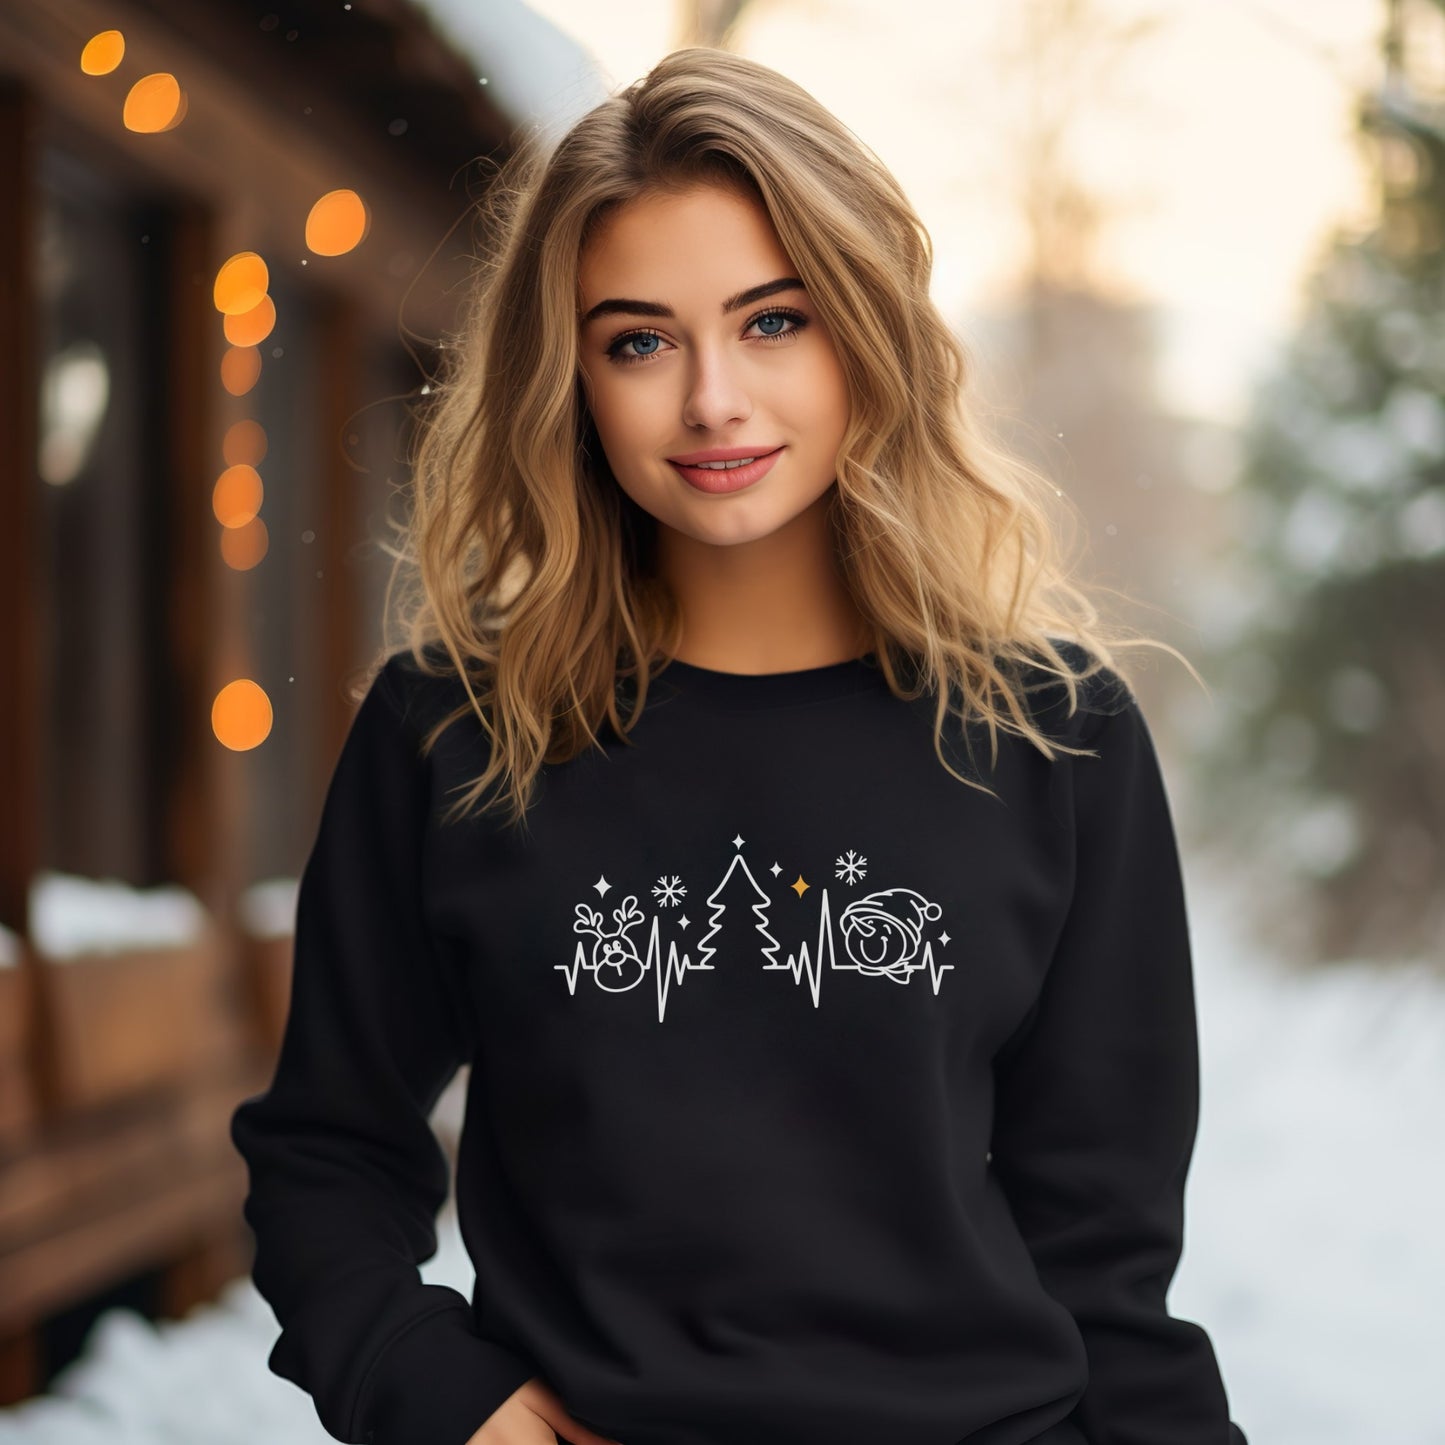 Unisex Christmas Sweater: Heartbeats of Christmas